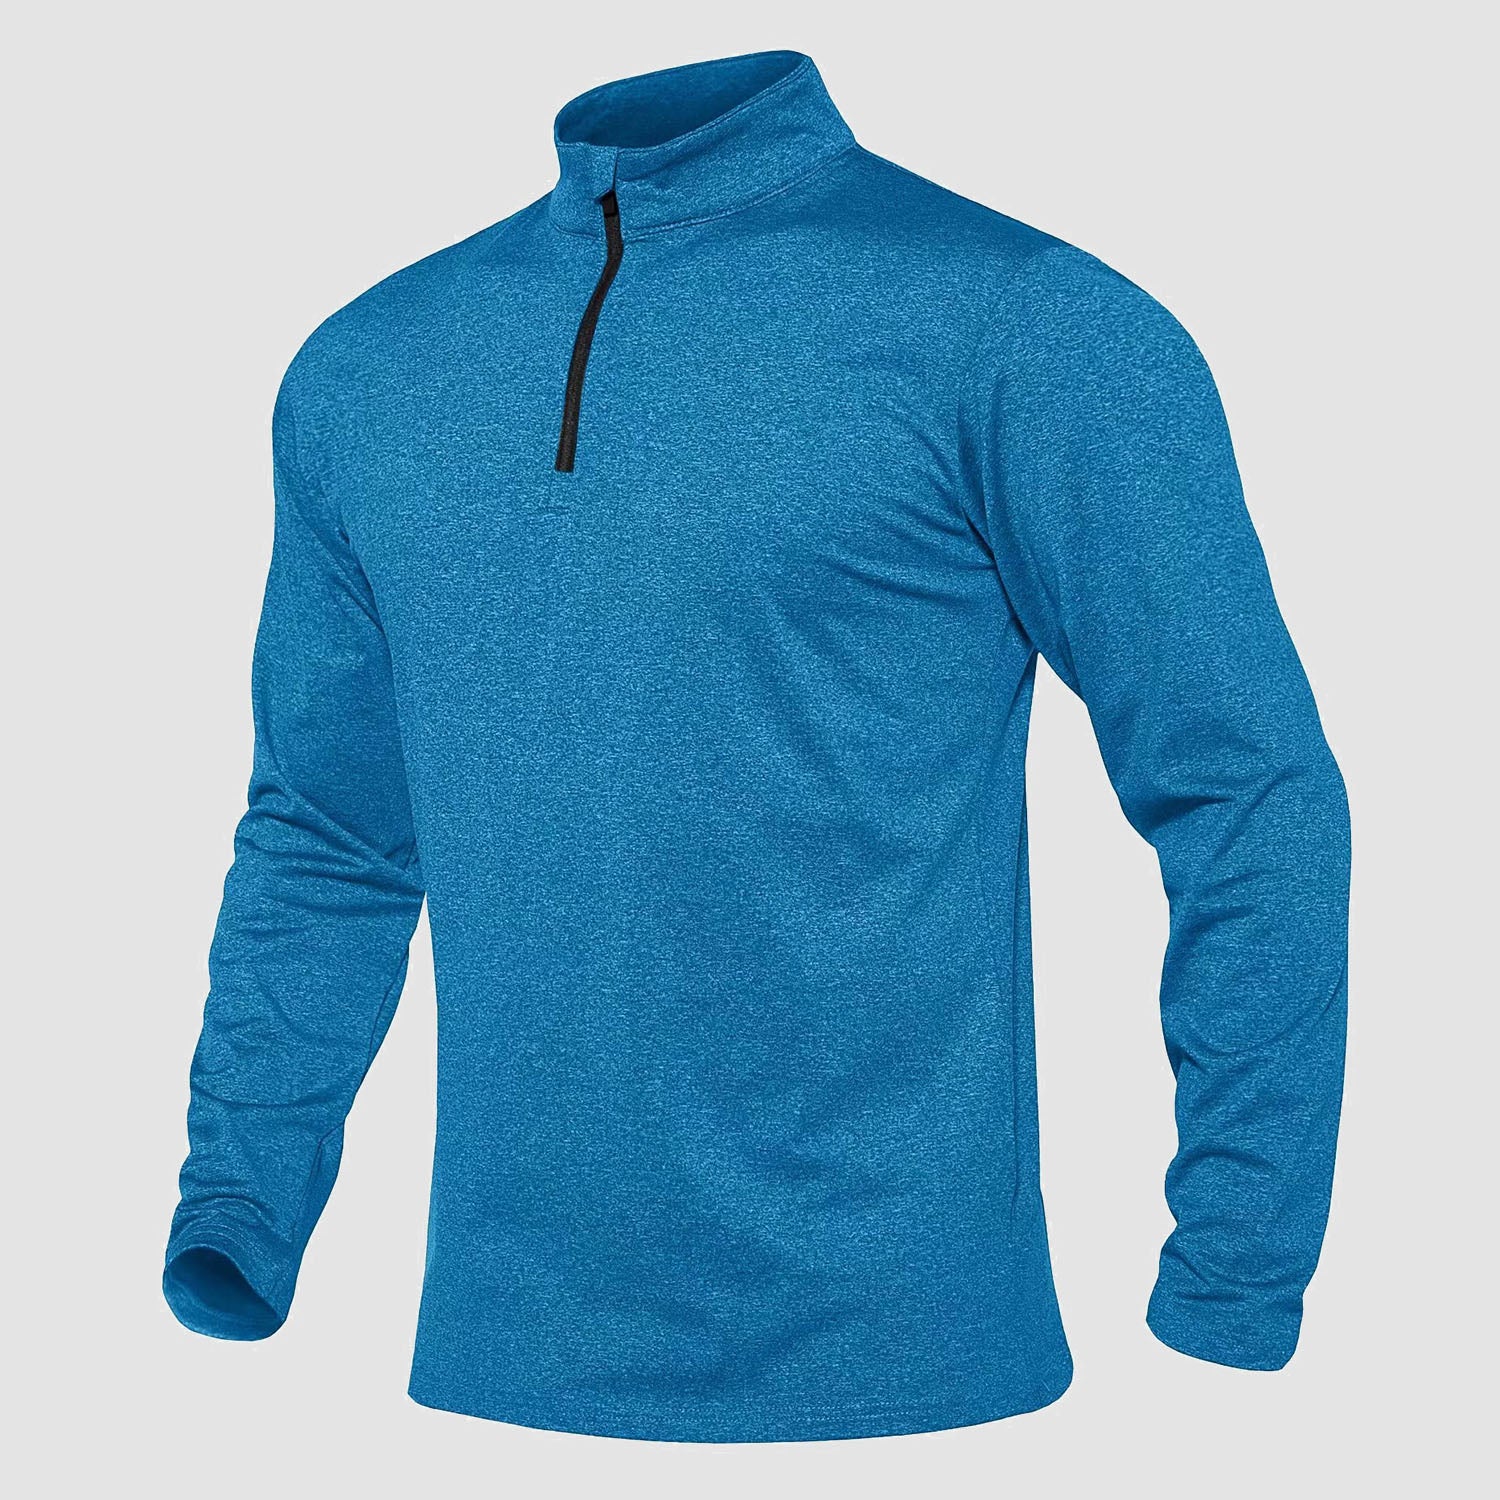 Men's Athletic Shirts 1/4 Zip Fleece Pullover Long Sleeve Sweatshirts